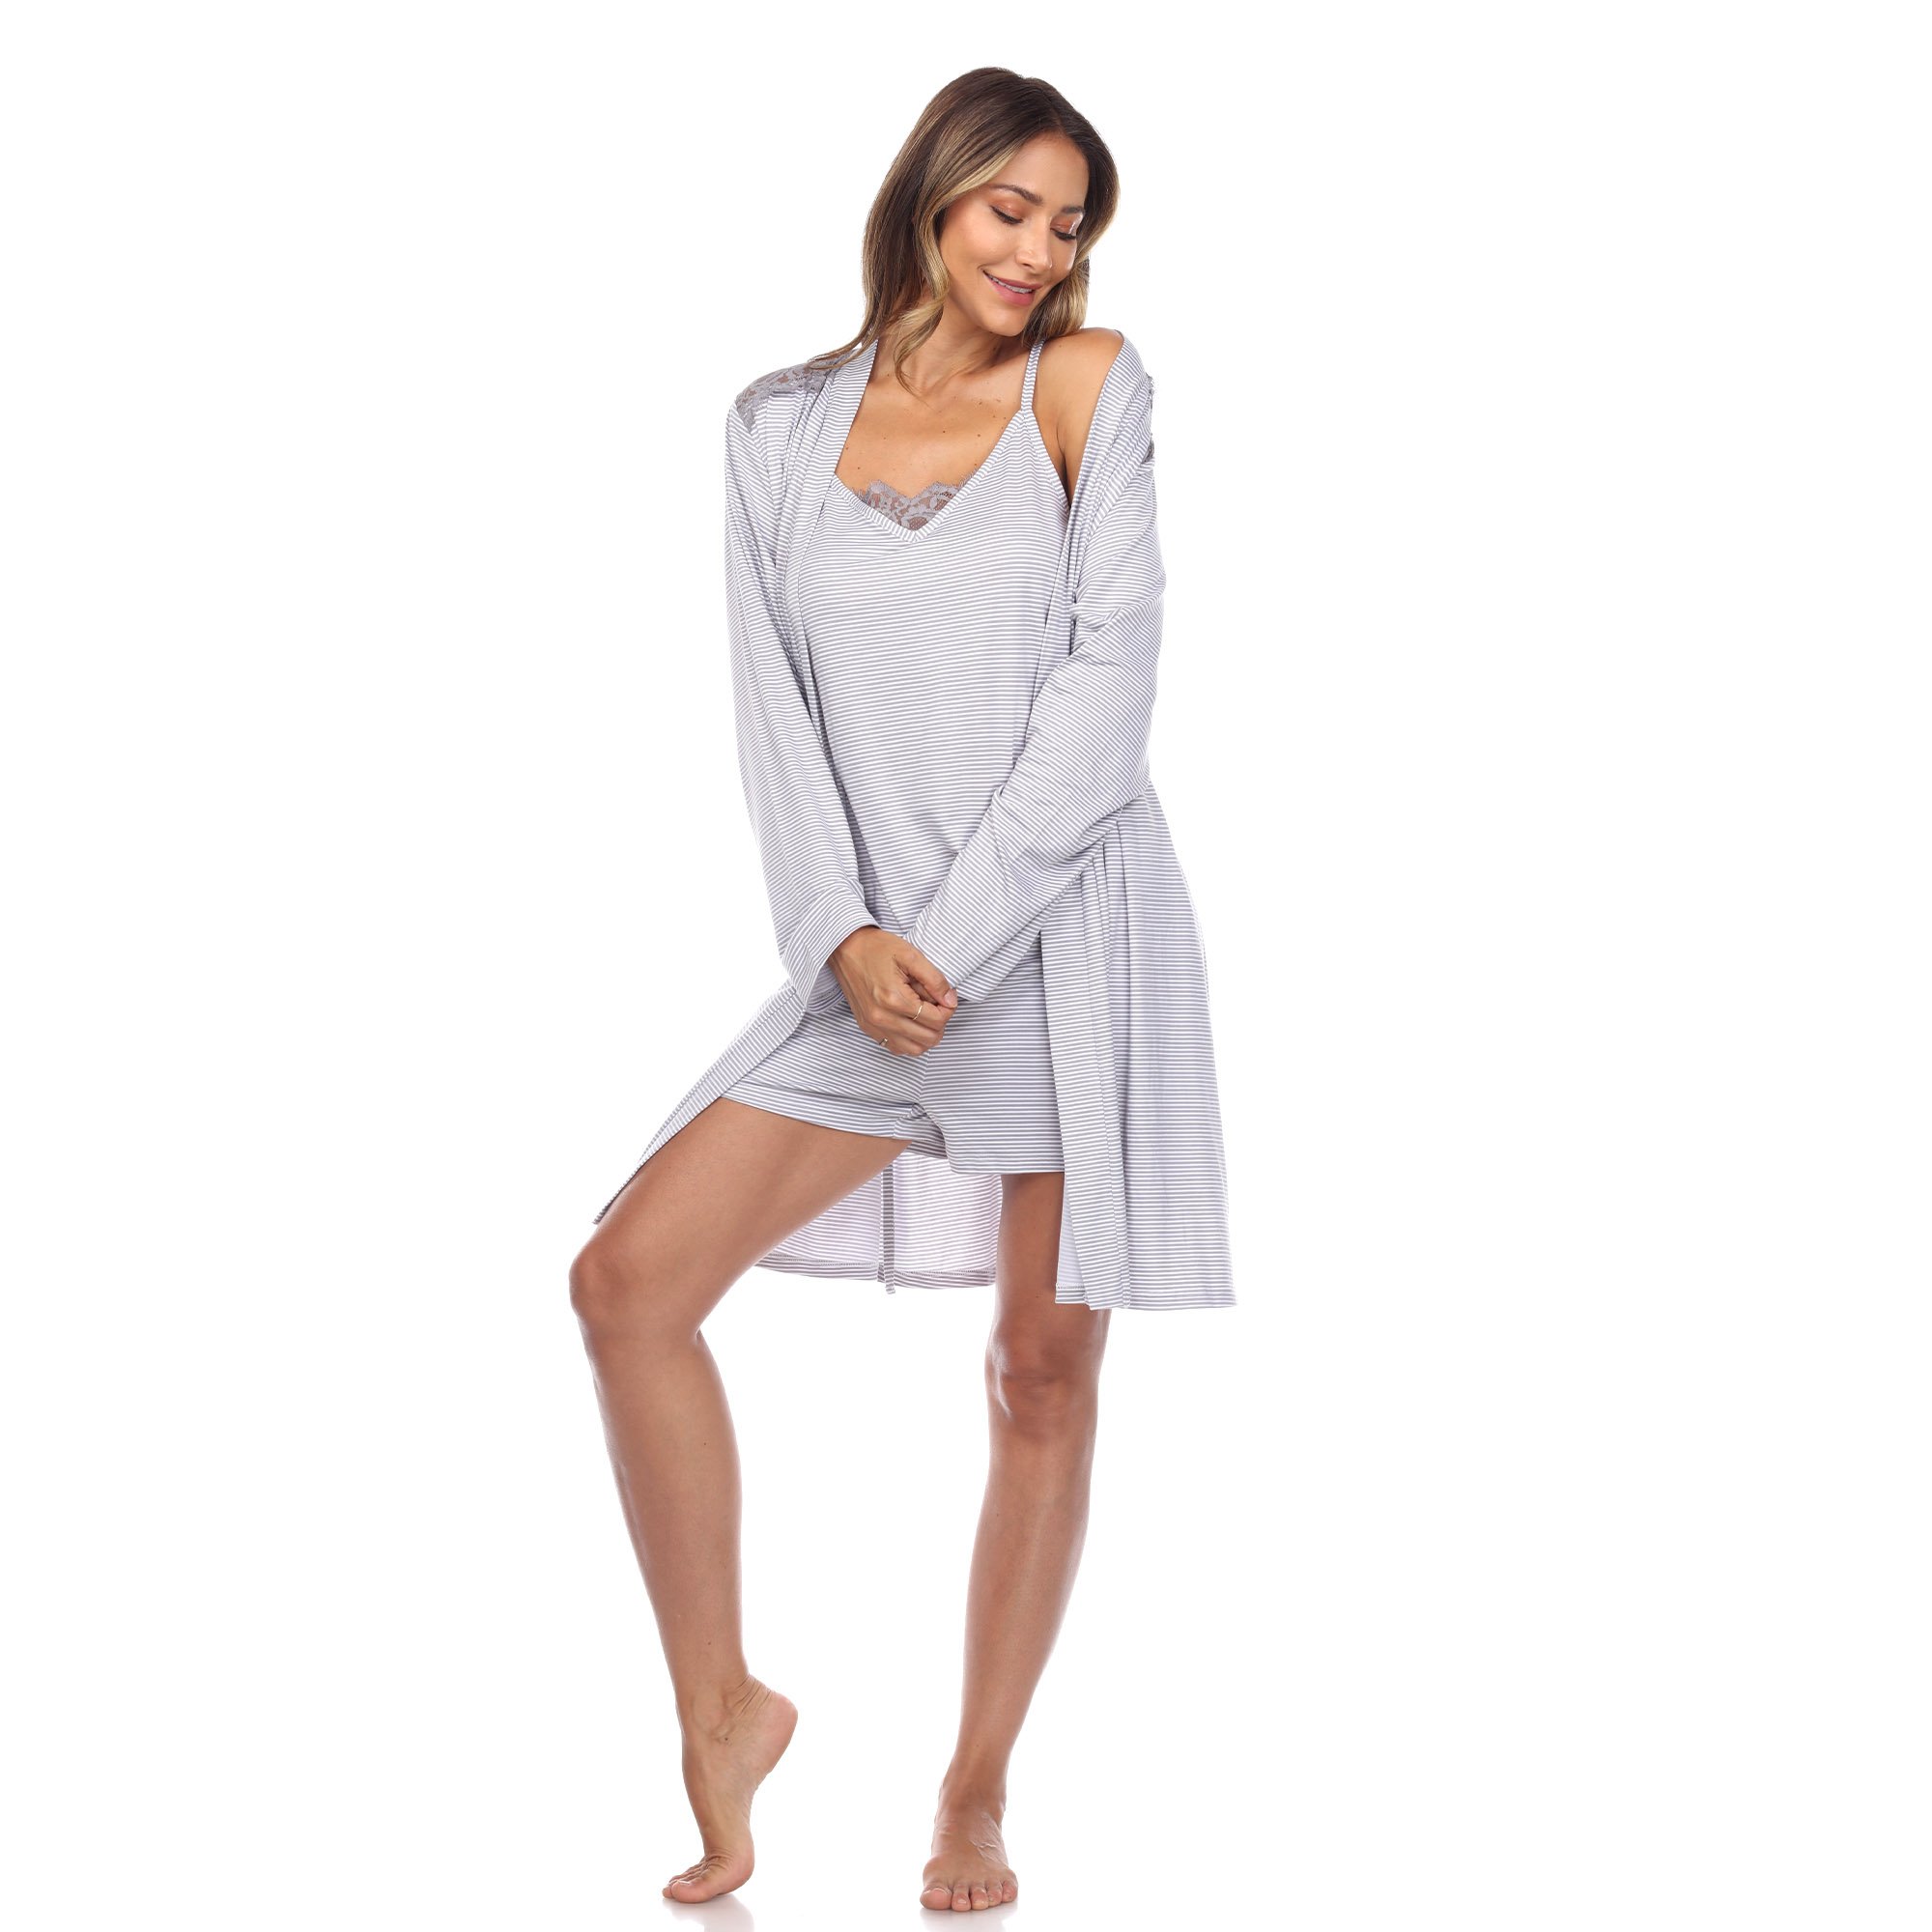 White Mark Women's 3-Piece Striped Camo Top, Shorts & Robe Matching Pajama Set - Grey, Large